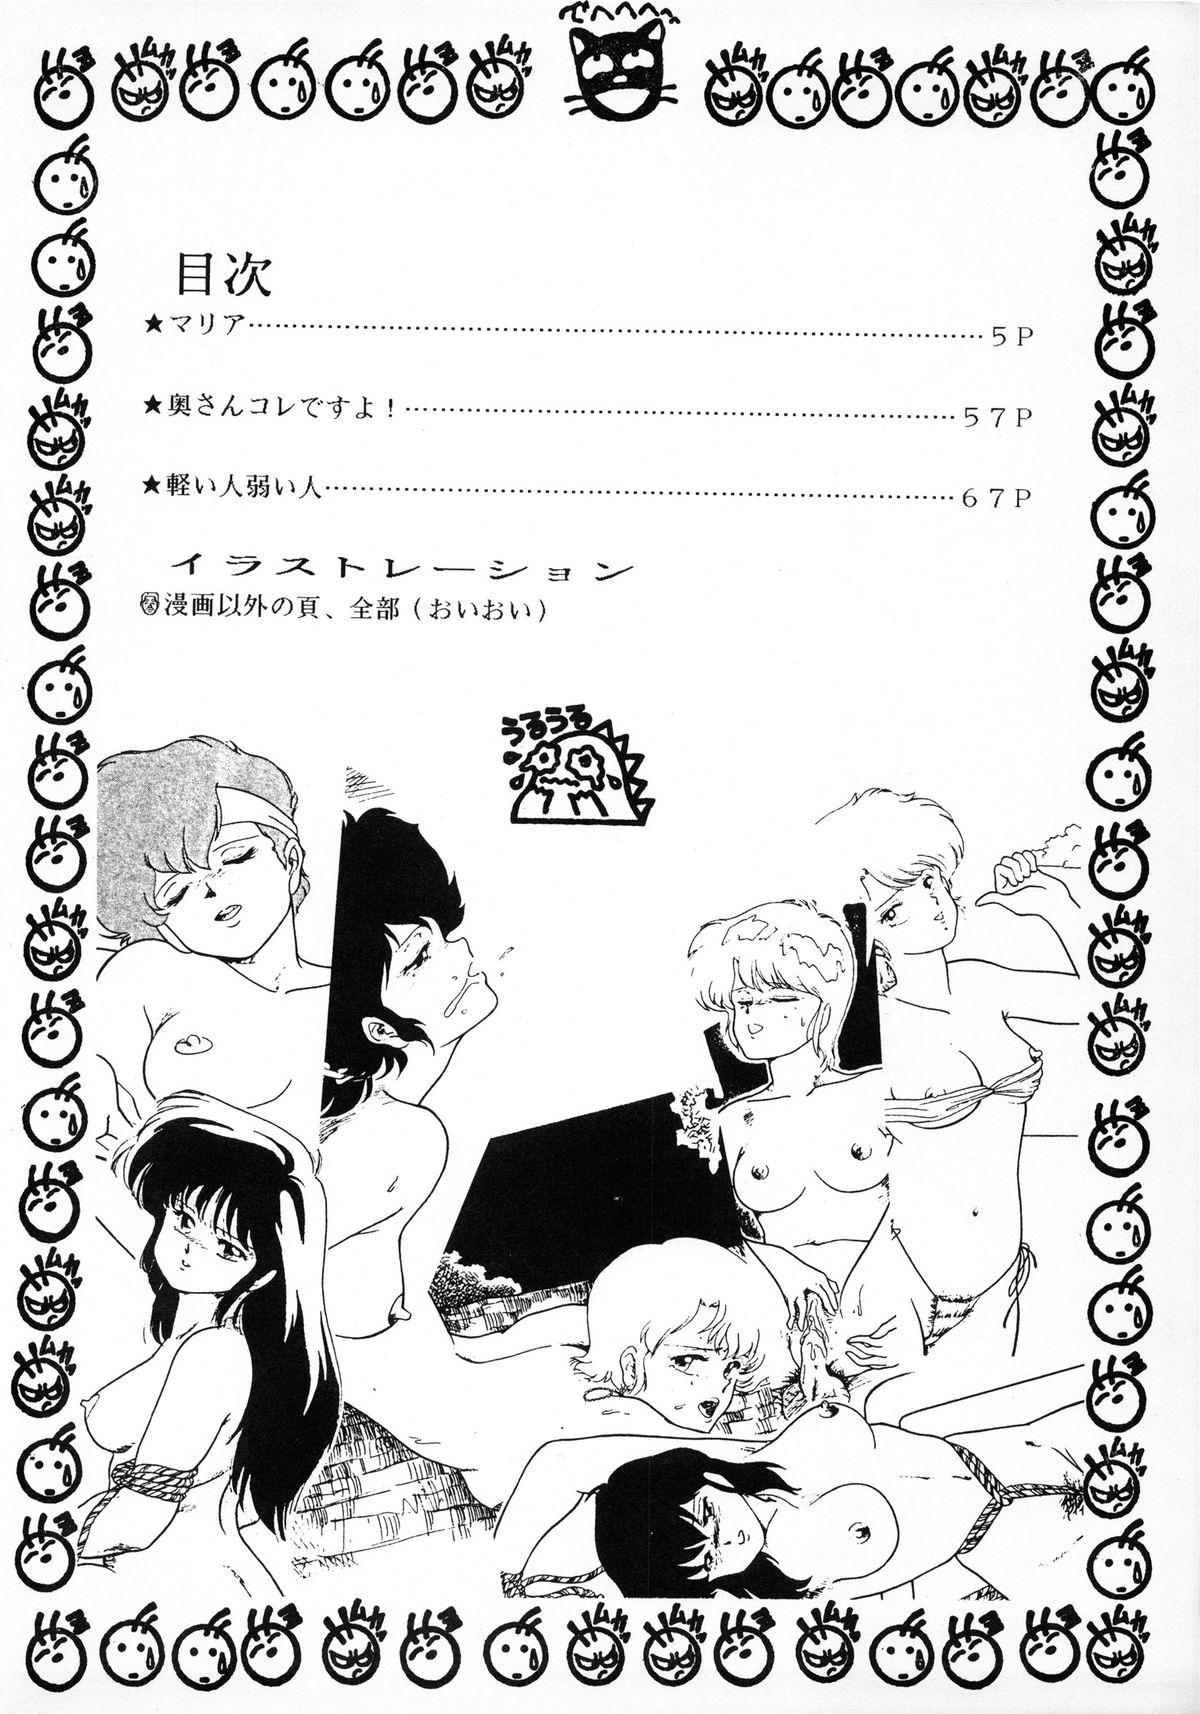 Kiss DOG FIGHT COLLECTION - Urusei yatsura Maison ikkoku Kimagure orange road Leite - Page 4